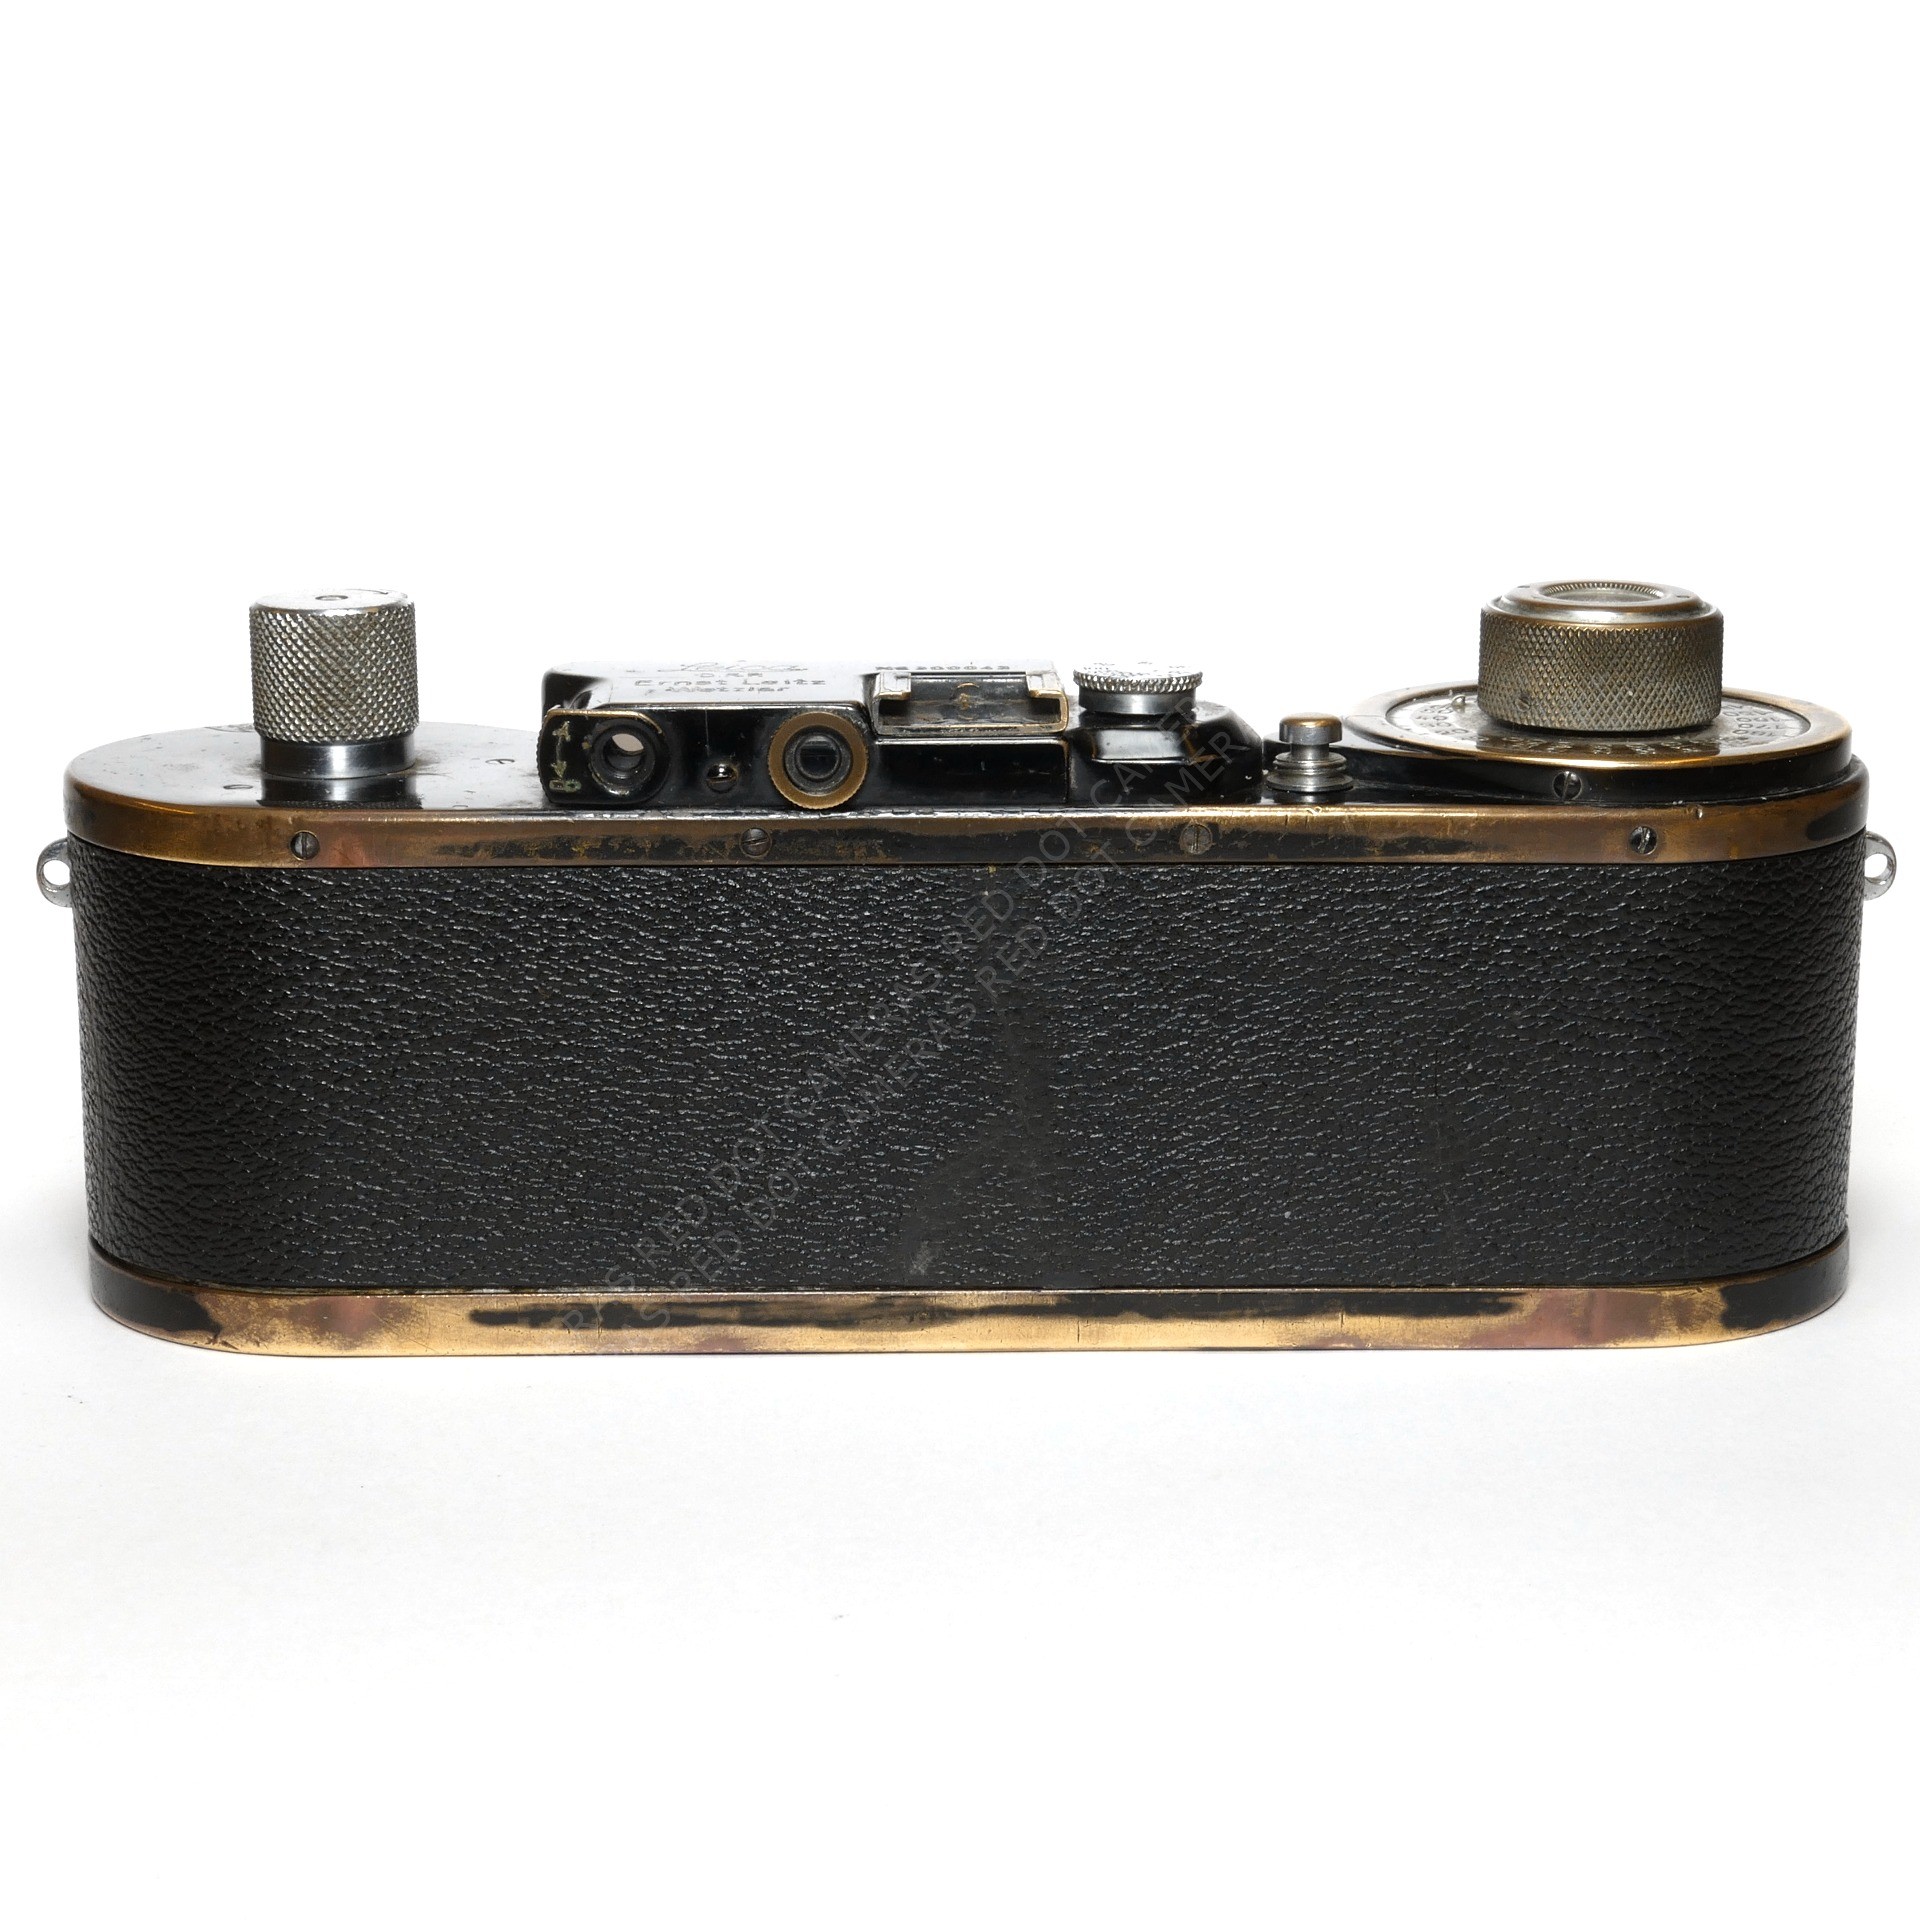 Leica 250 GG & Elmar 5cm f3.5 & Case